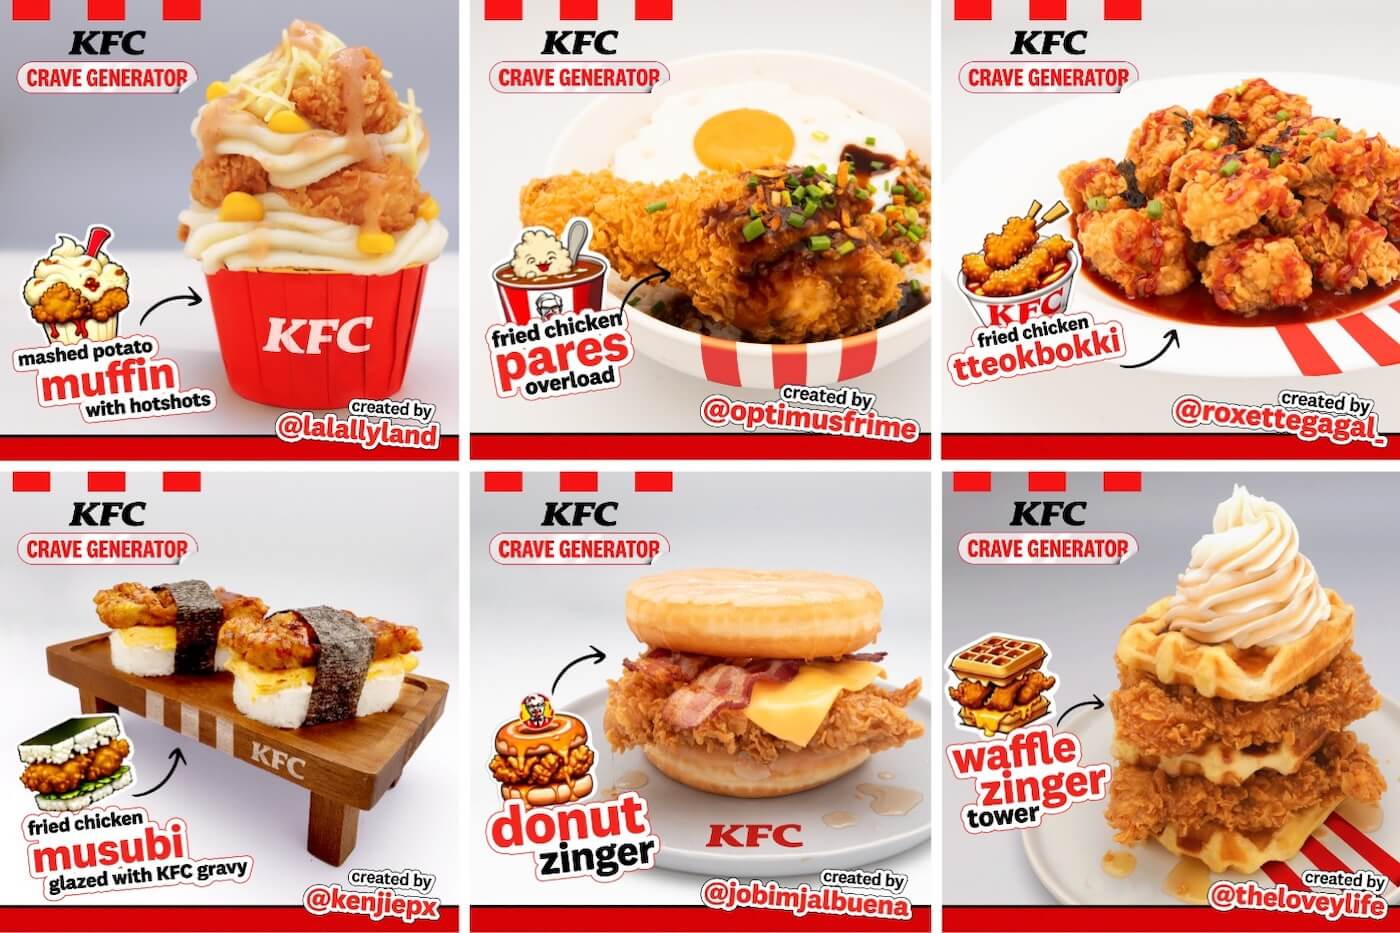 Six snacks created using KFC's Crave Generator 